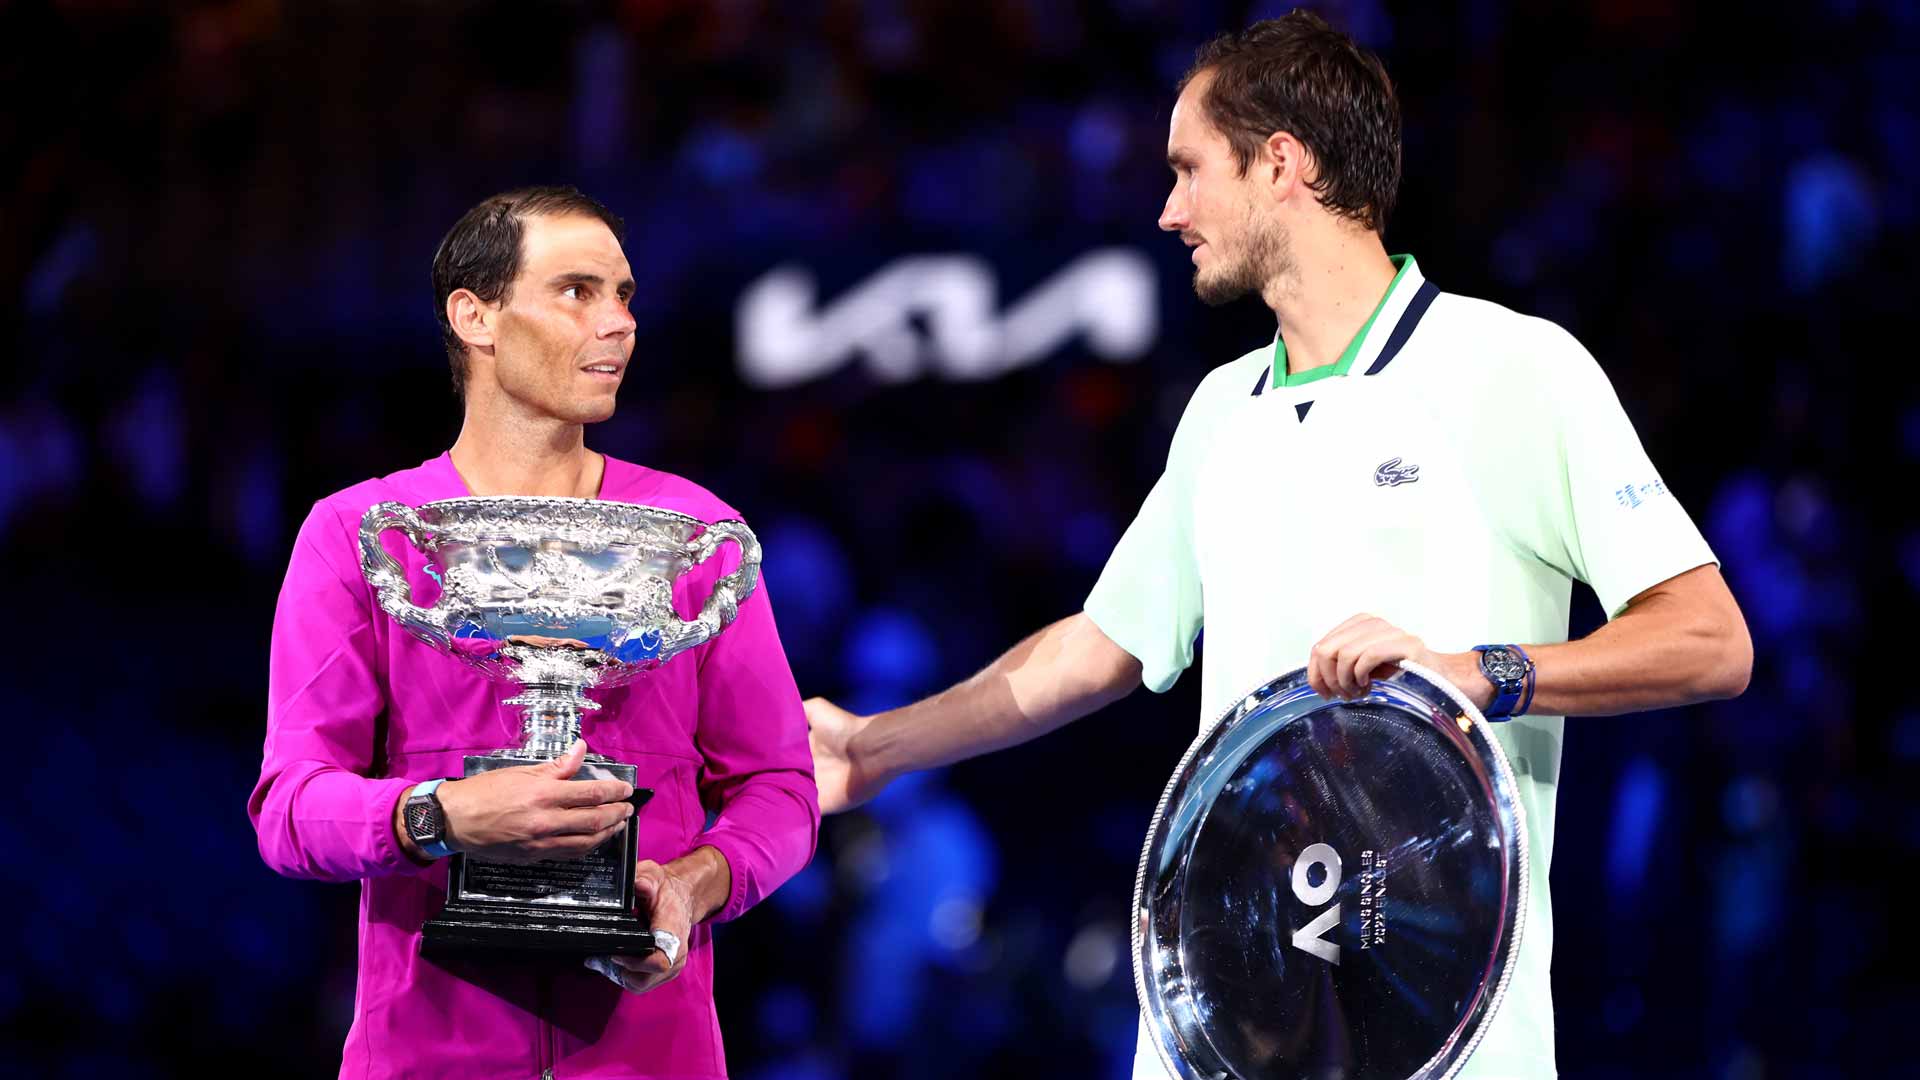 Daniil Medvedev loses to Rafael Nadal in the Australian Open final.